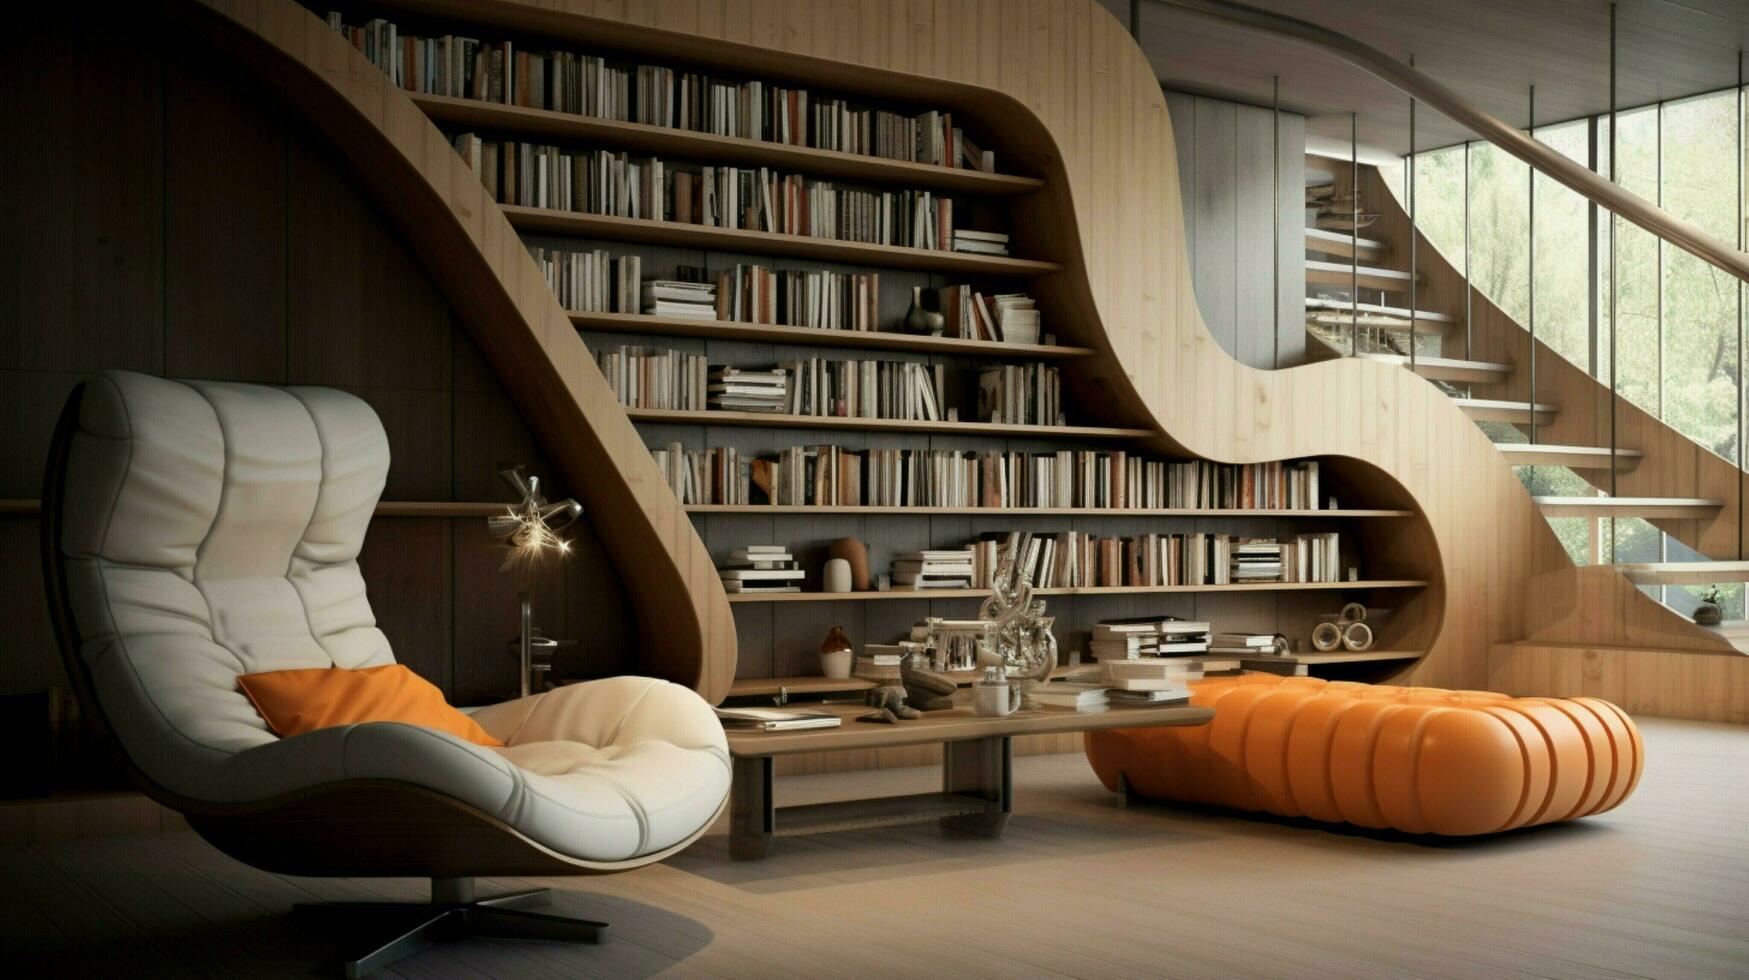 indoor library with modern bookshelf comfortable armchair photo